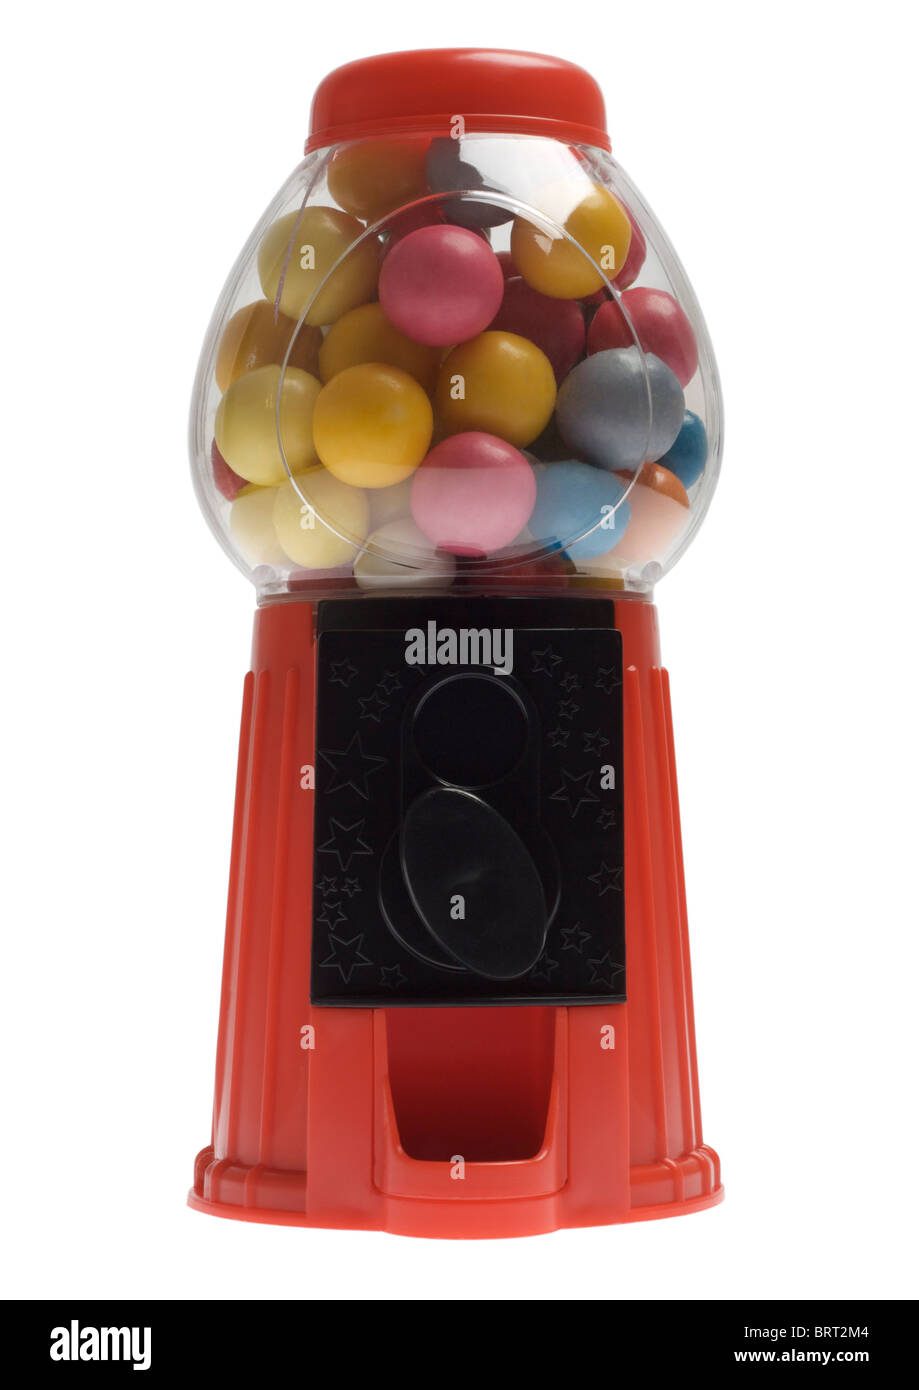 Gum ball machine on white background Stock Photo